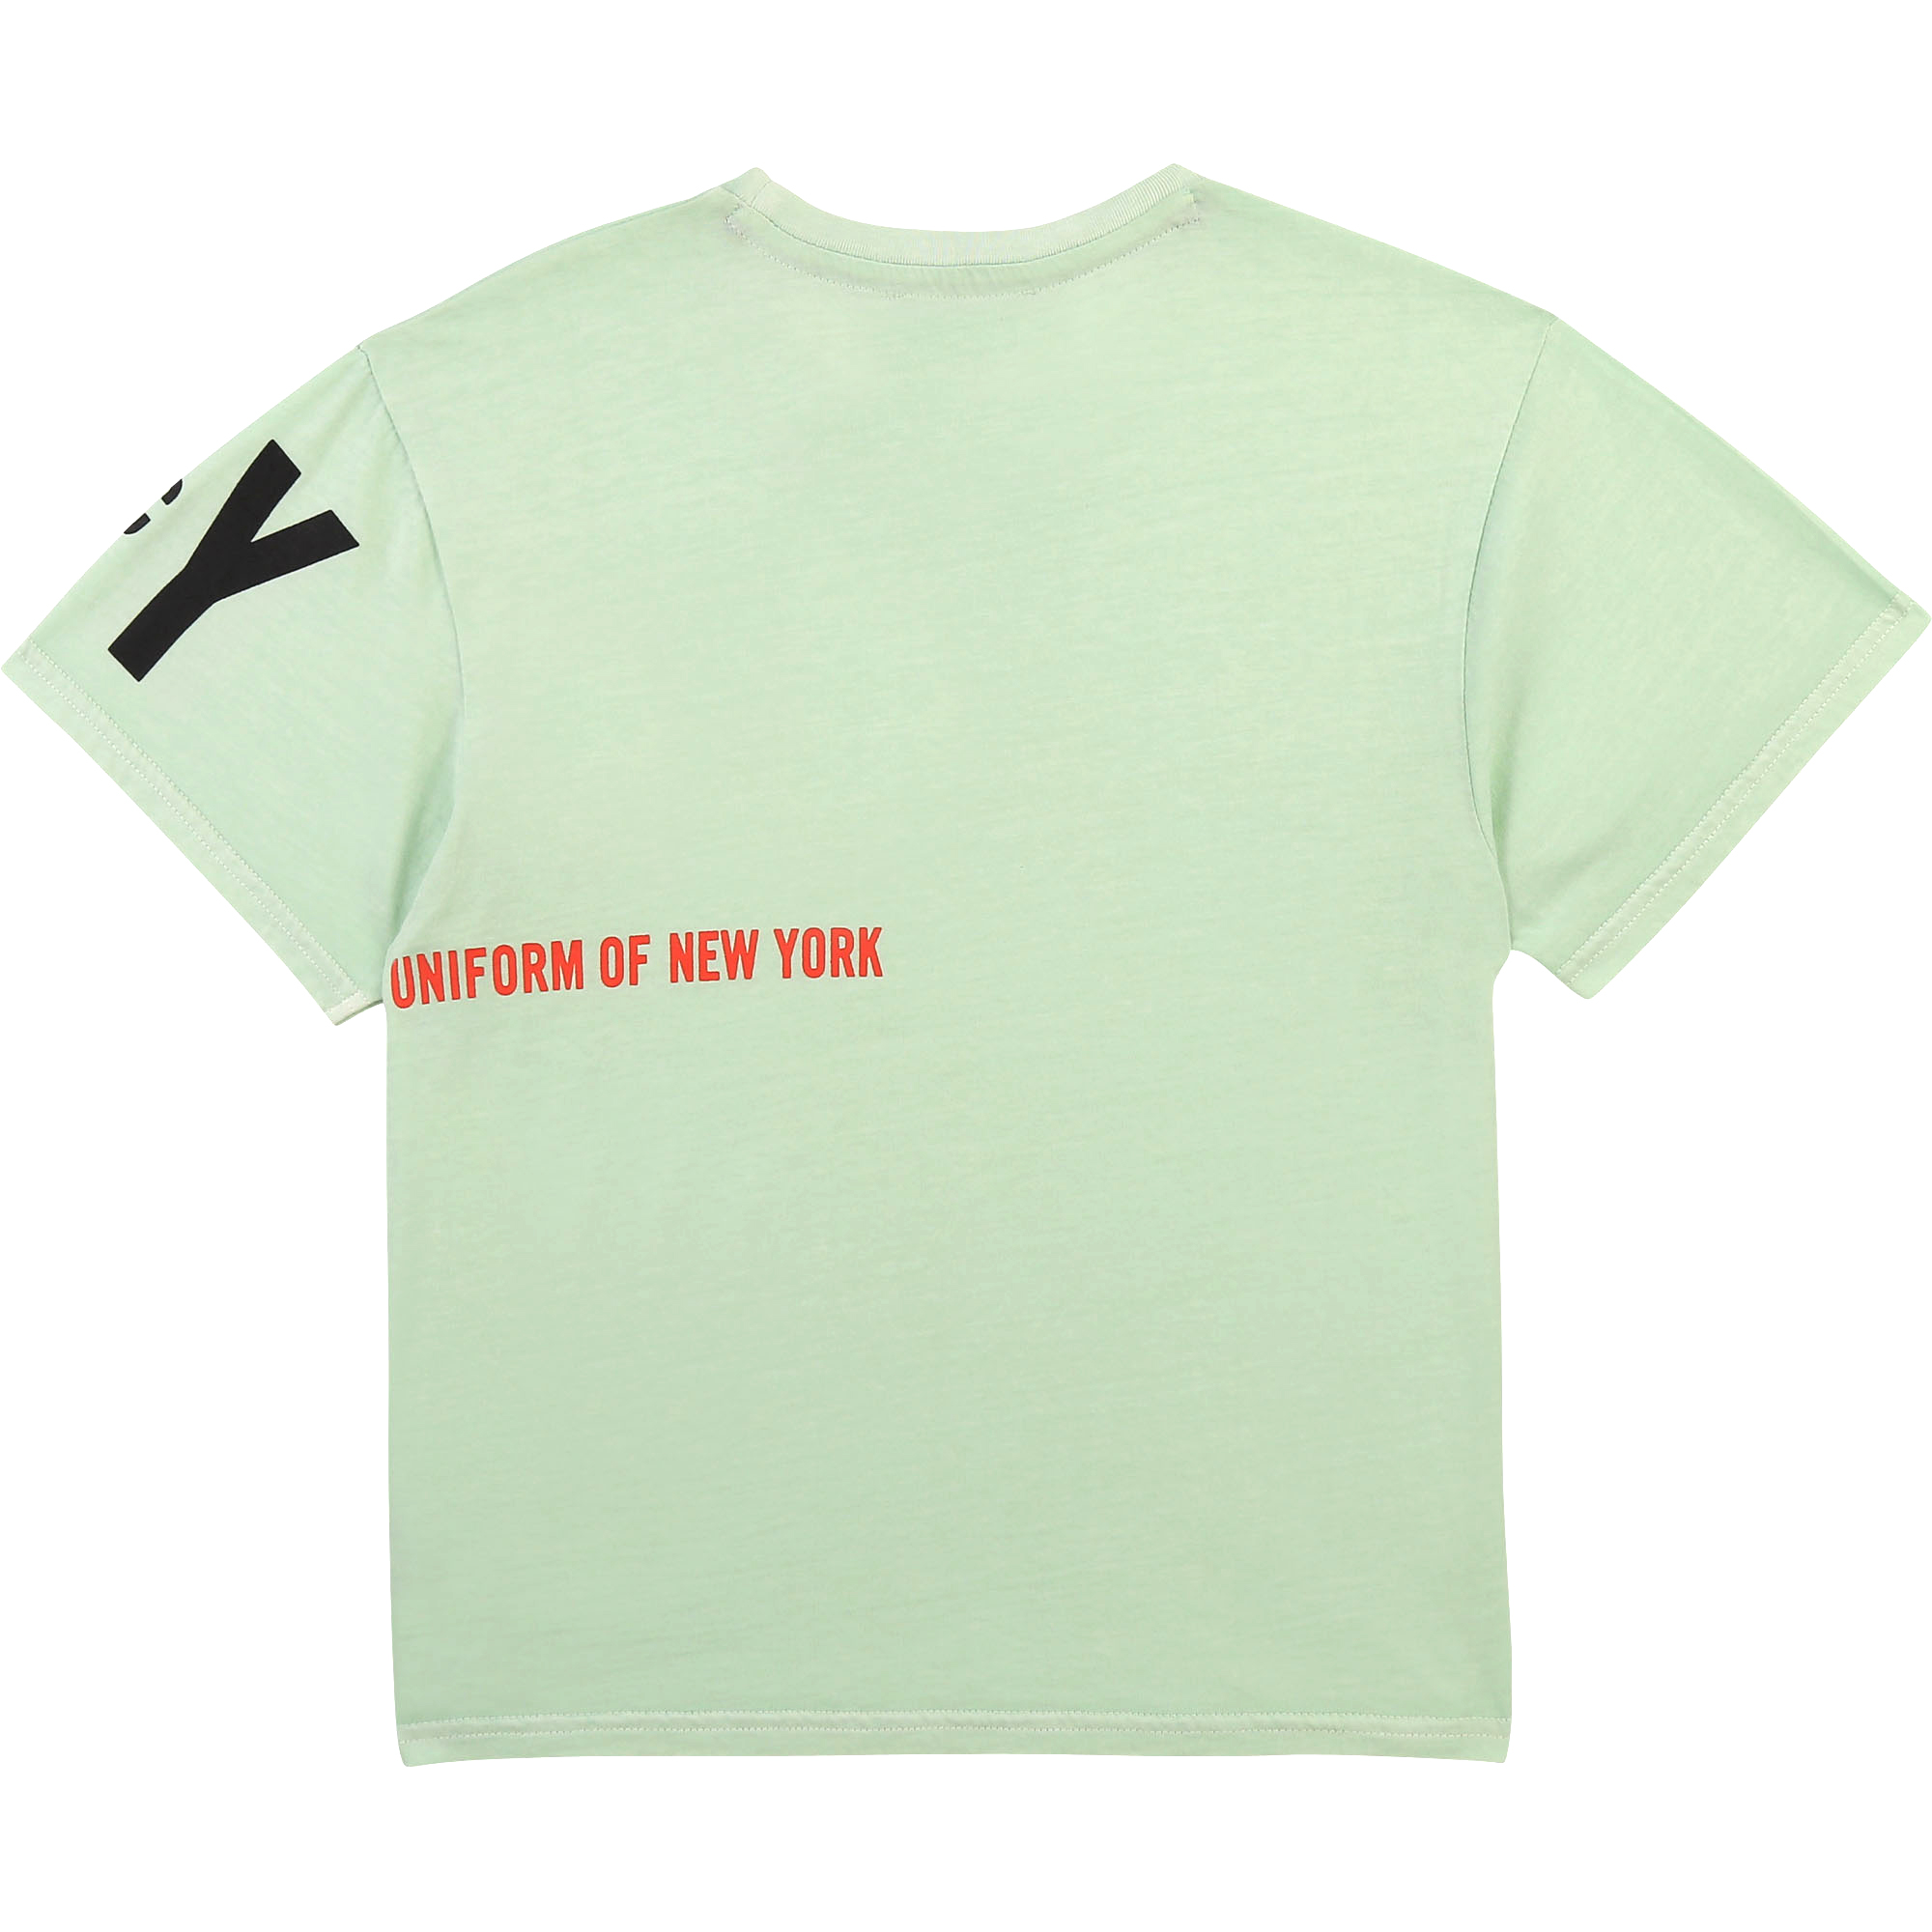 Tee-shirt DKNY pour GARCON